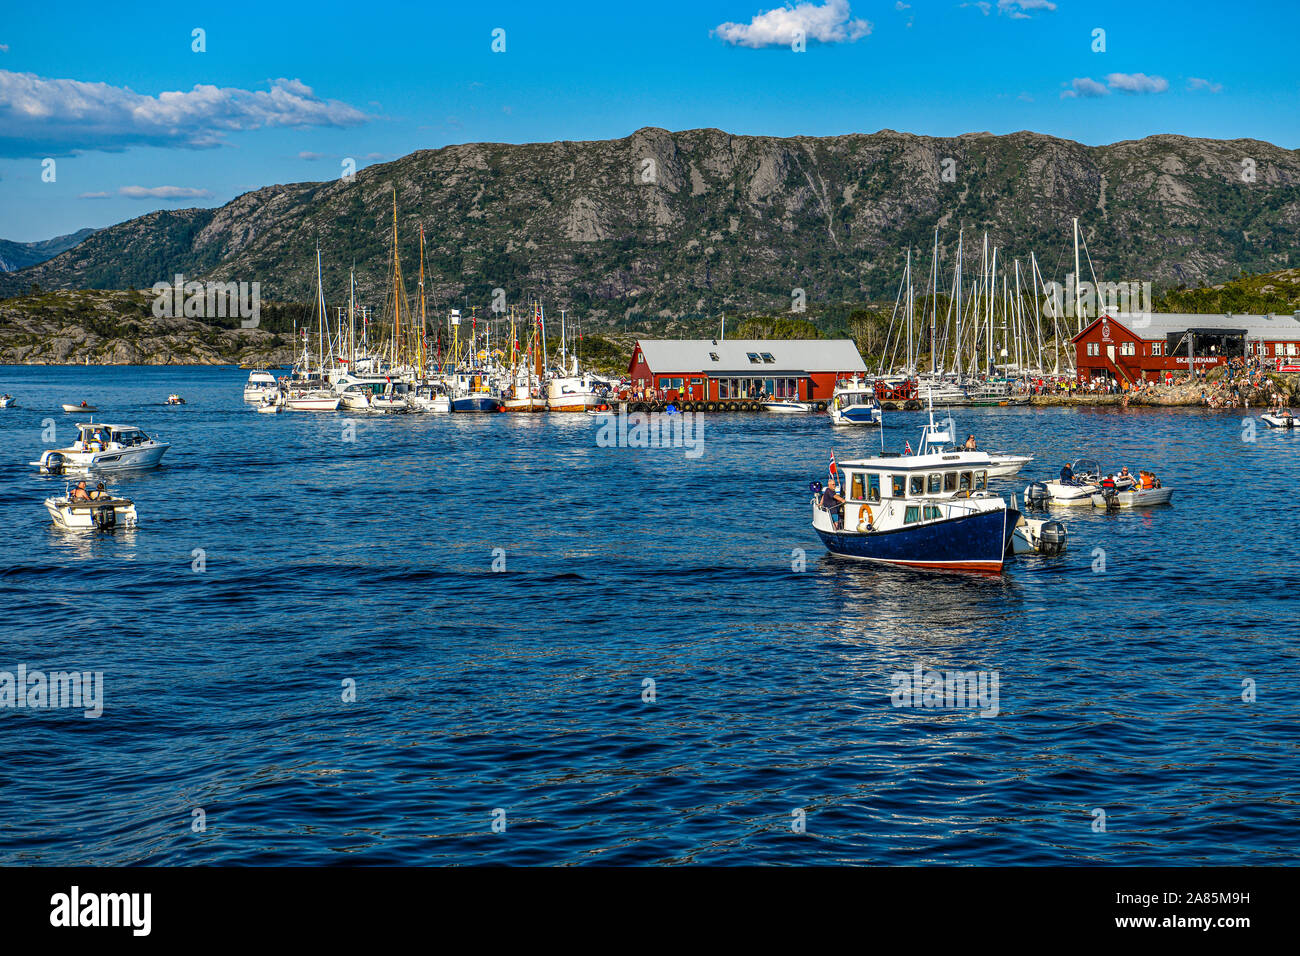 Noruega. Norvegia. Skjerjehamn está establecido en una hermosa isla petite, justo en la boca del fiordo Sognefjord Foto de stock